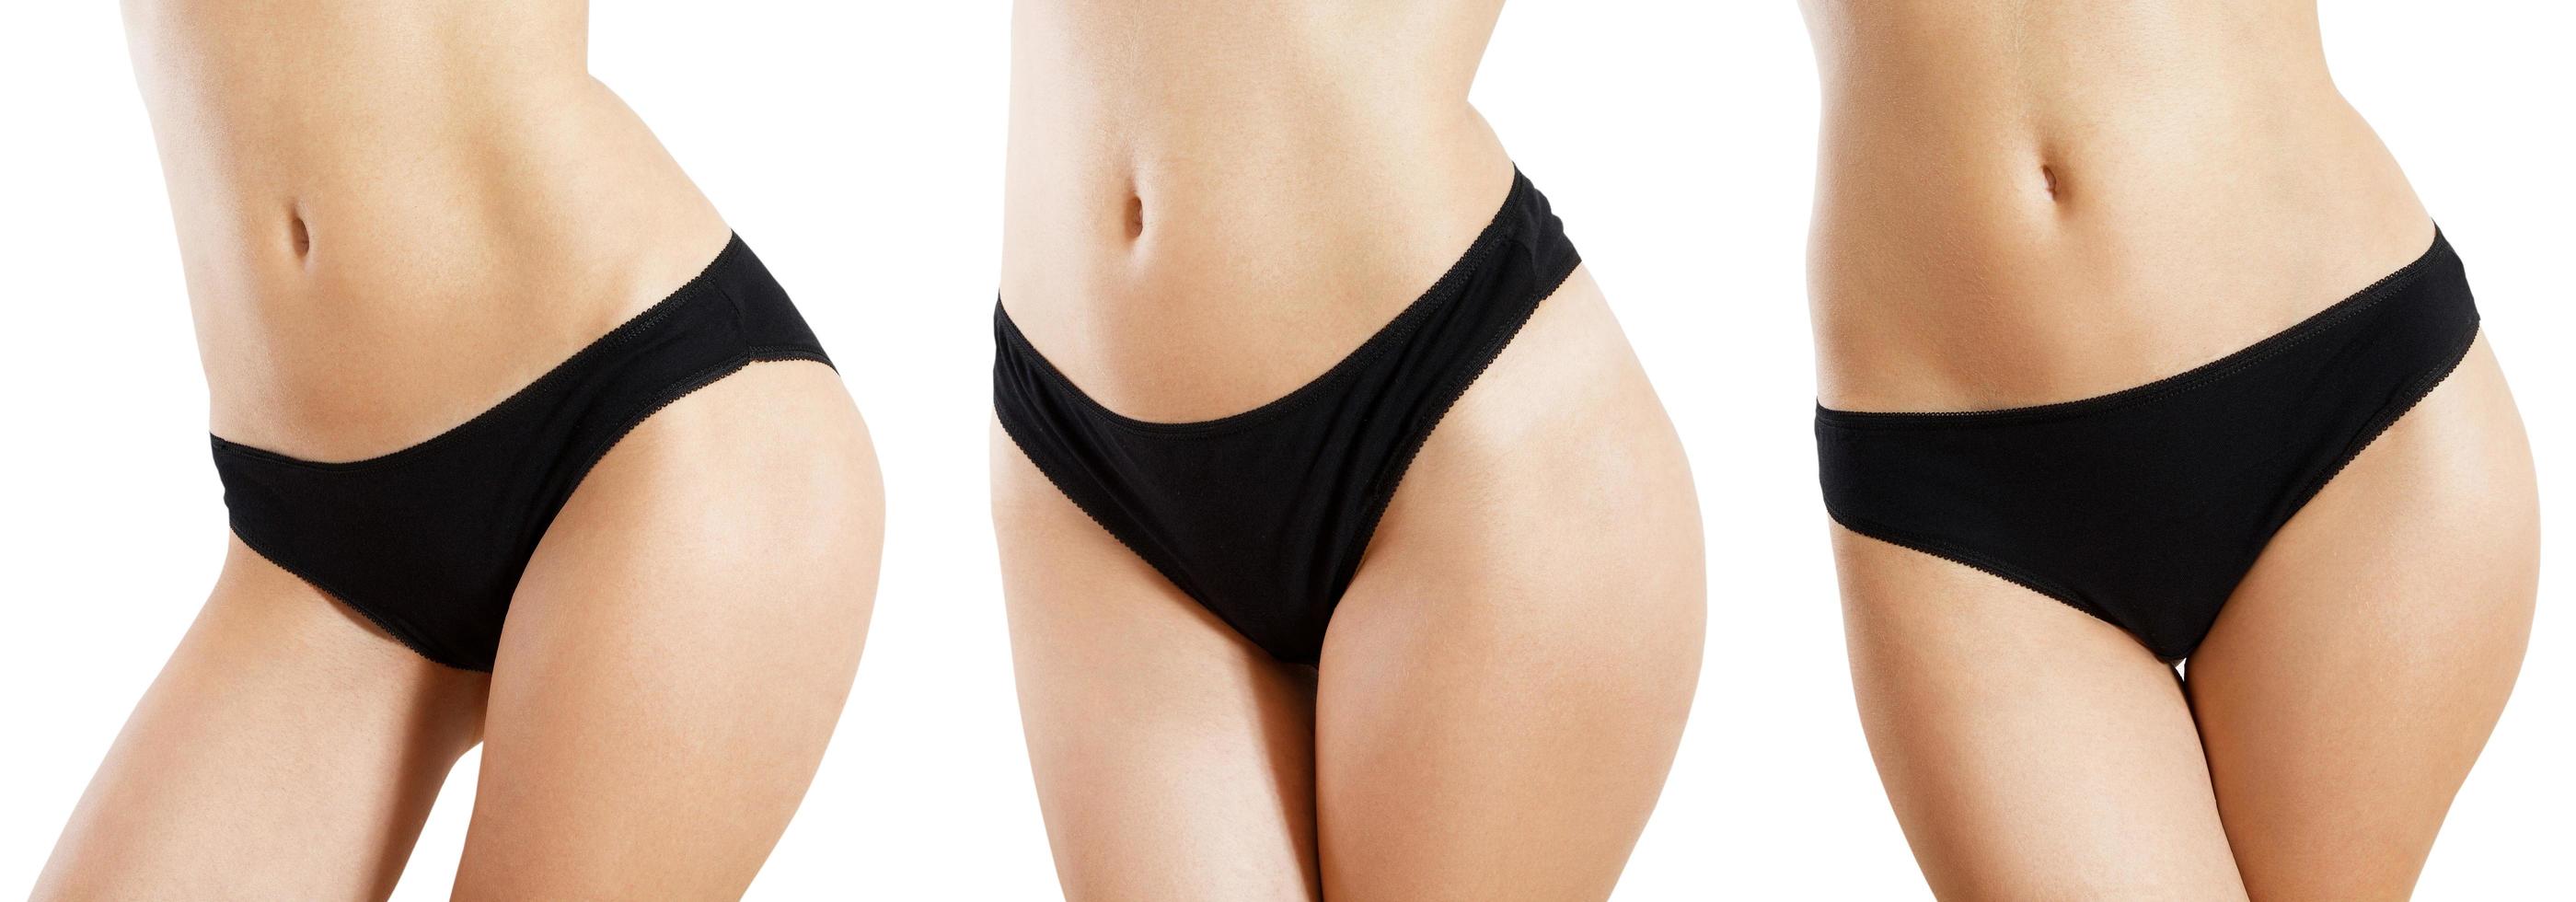 Women's panties on a woman's body. Panties set. female panties mockup isolated photo